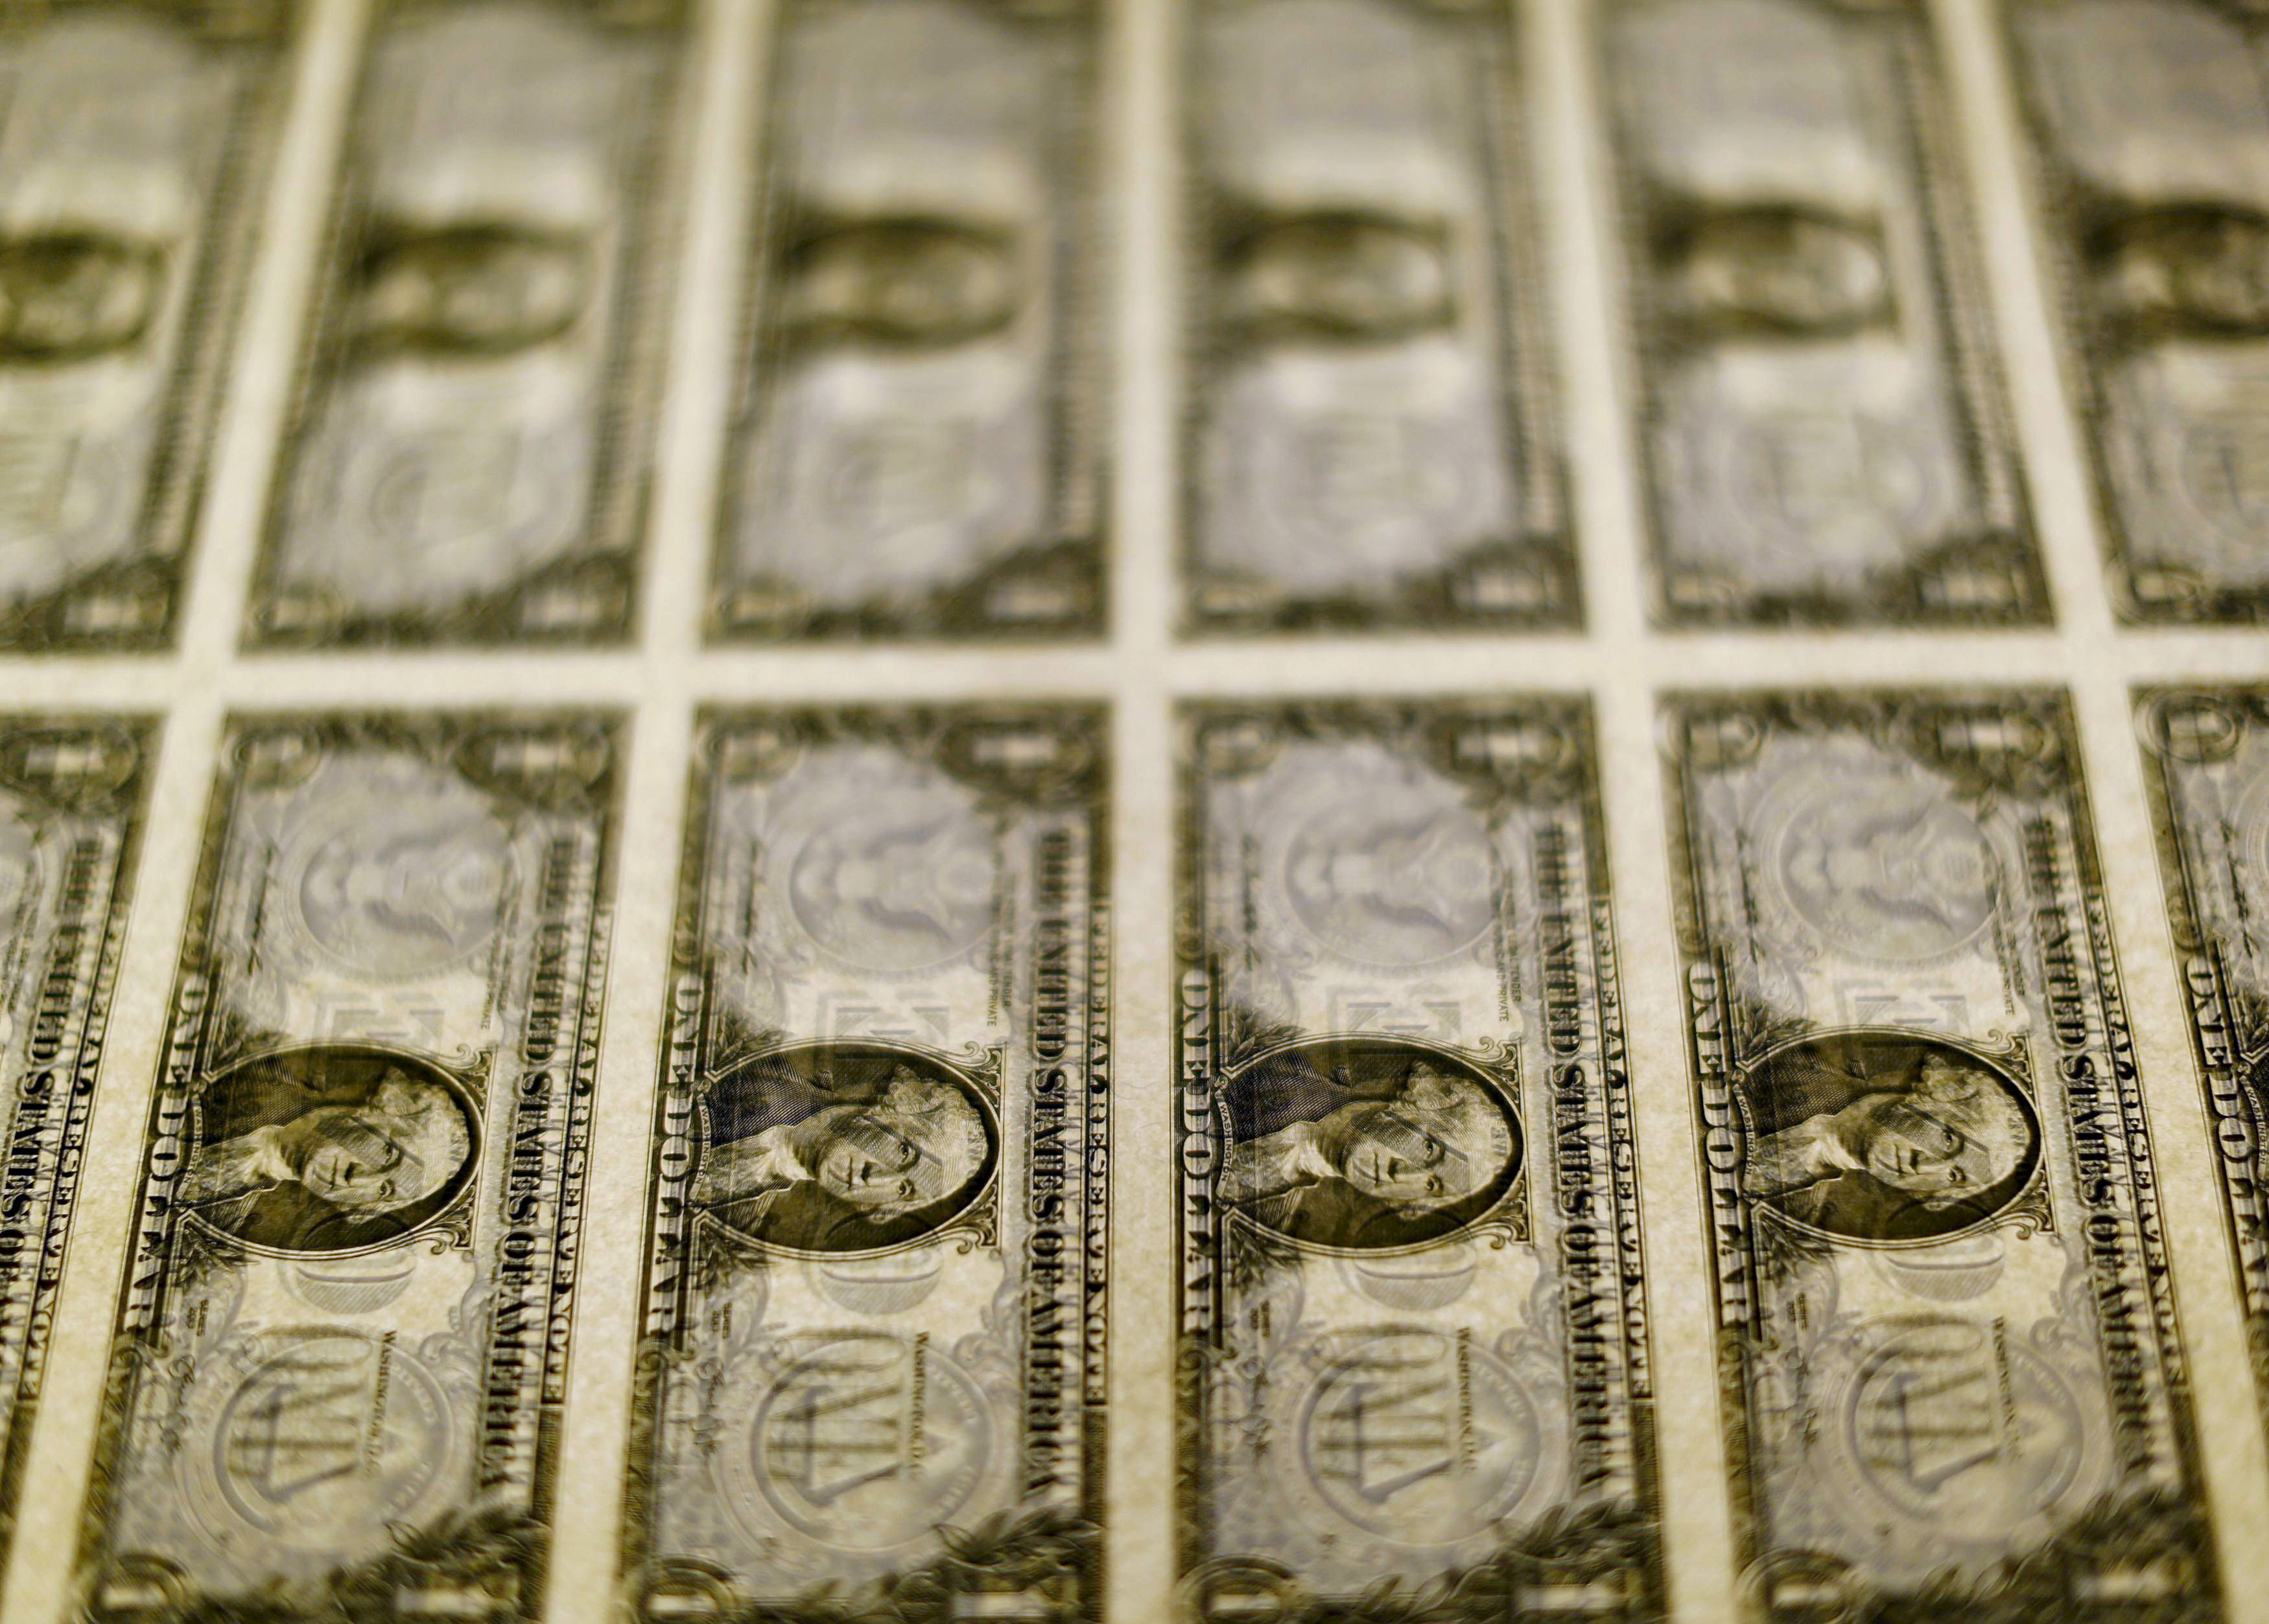 Notas de dólar (REUTERS/Gary Cameron)